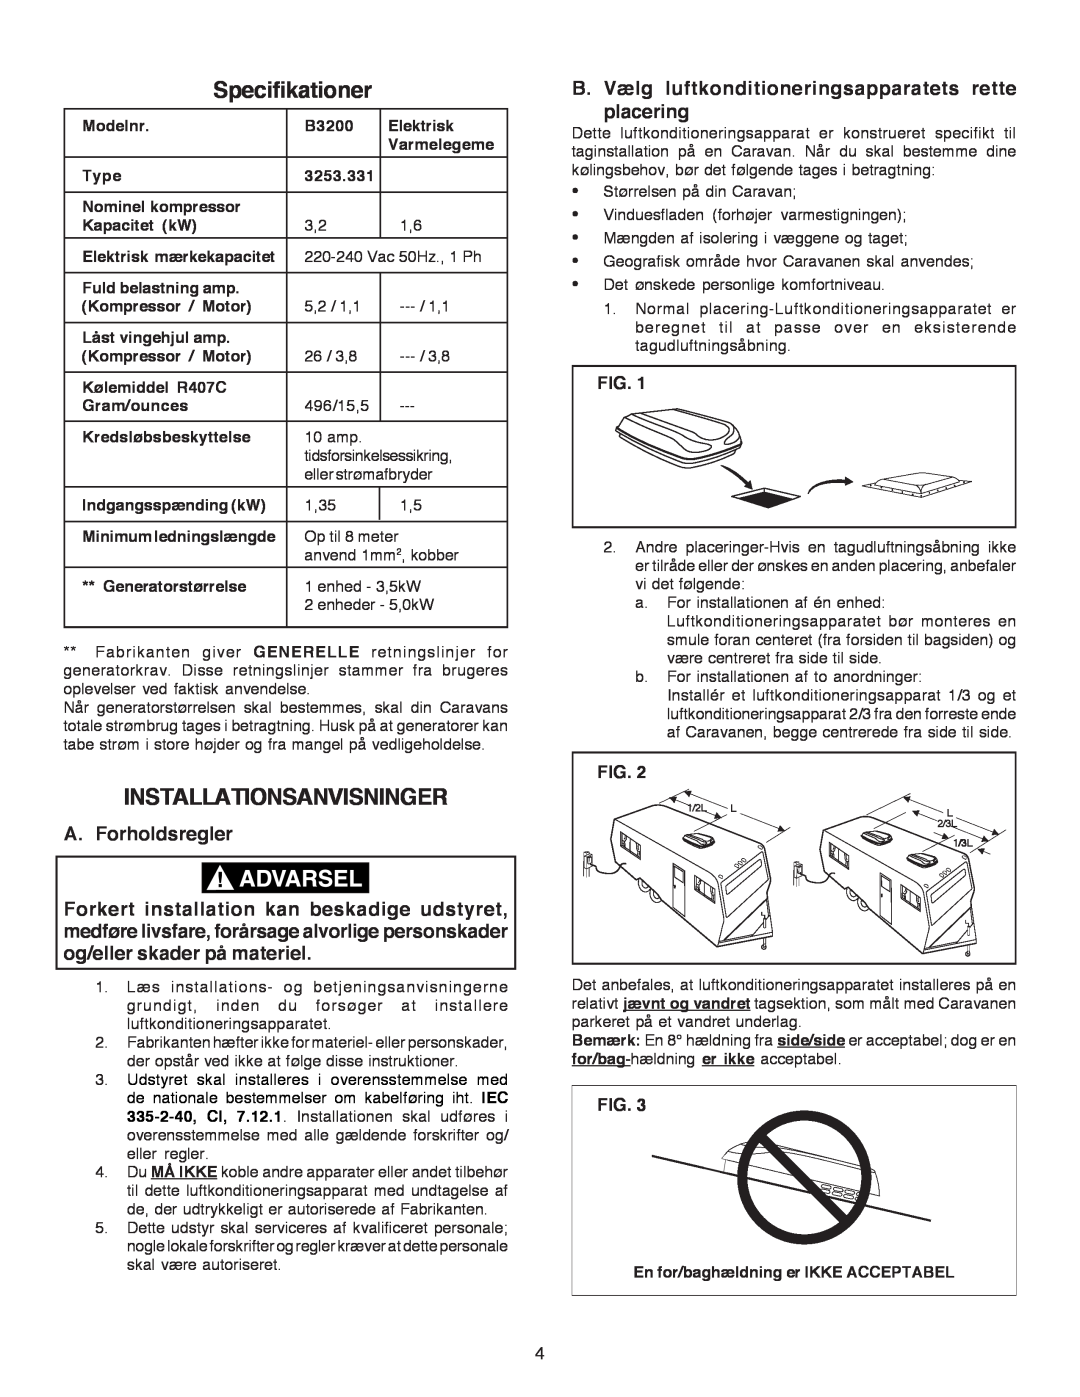 Dometic B3200 manual Specifikationer, Installationsanvisninger, A. Forholdsregler 